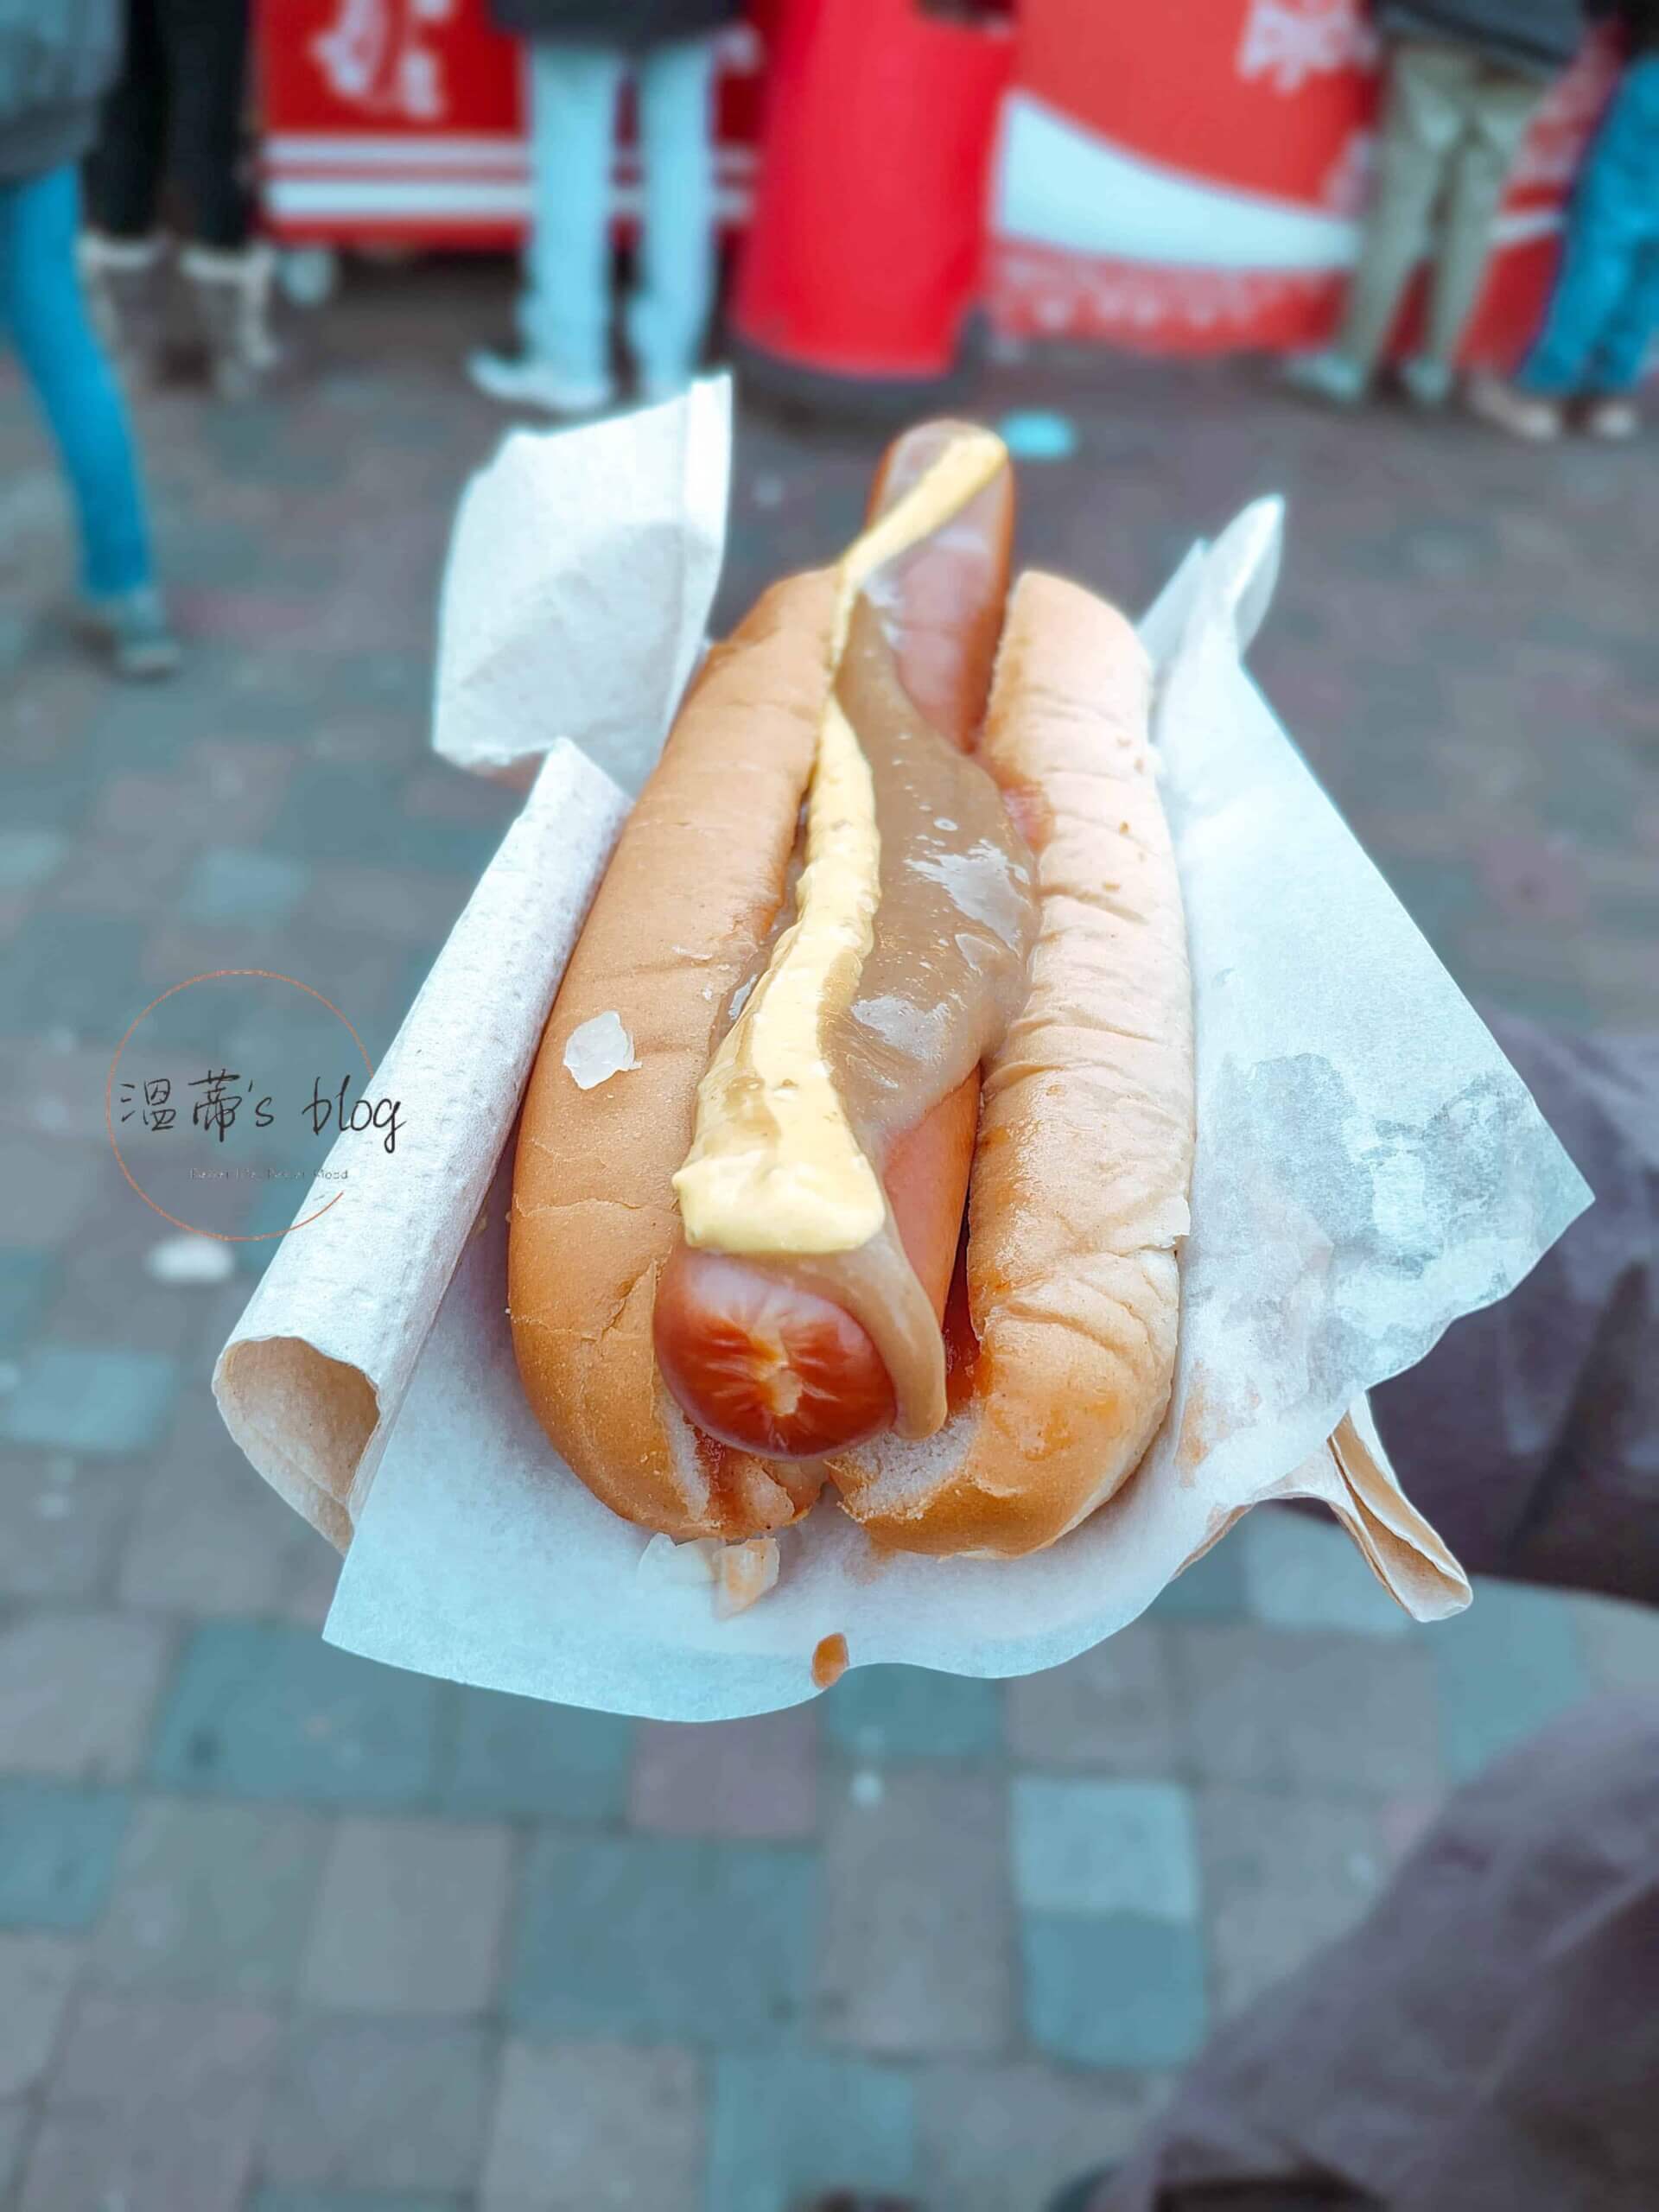 Bæjarins Beztu Pylsur  Hot dog 690 ISK配料有蕃茄醬、黃芥末、特調醬汁、生洋蔥、炸洋蔥